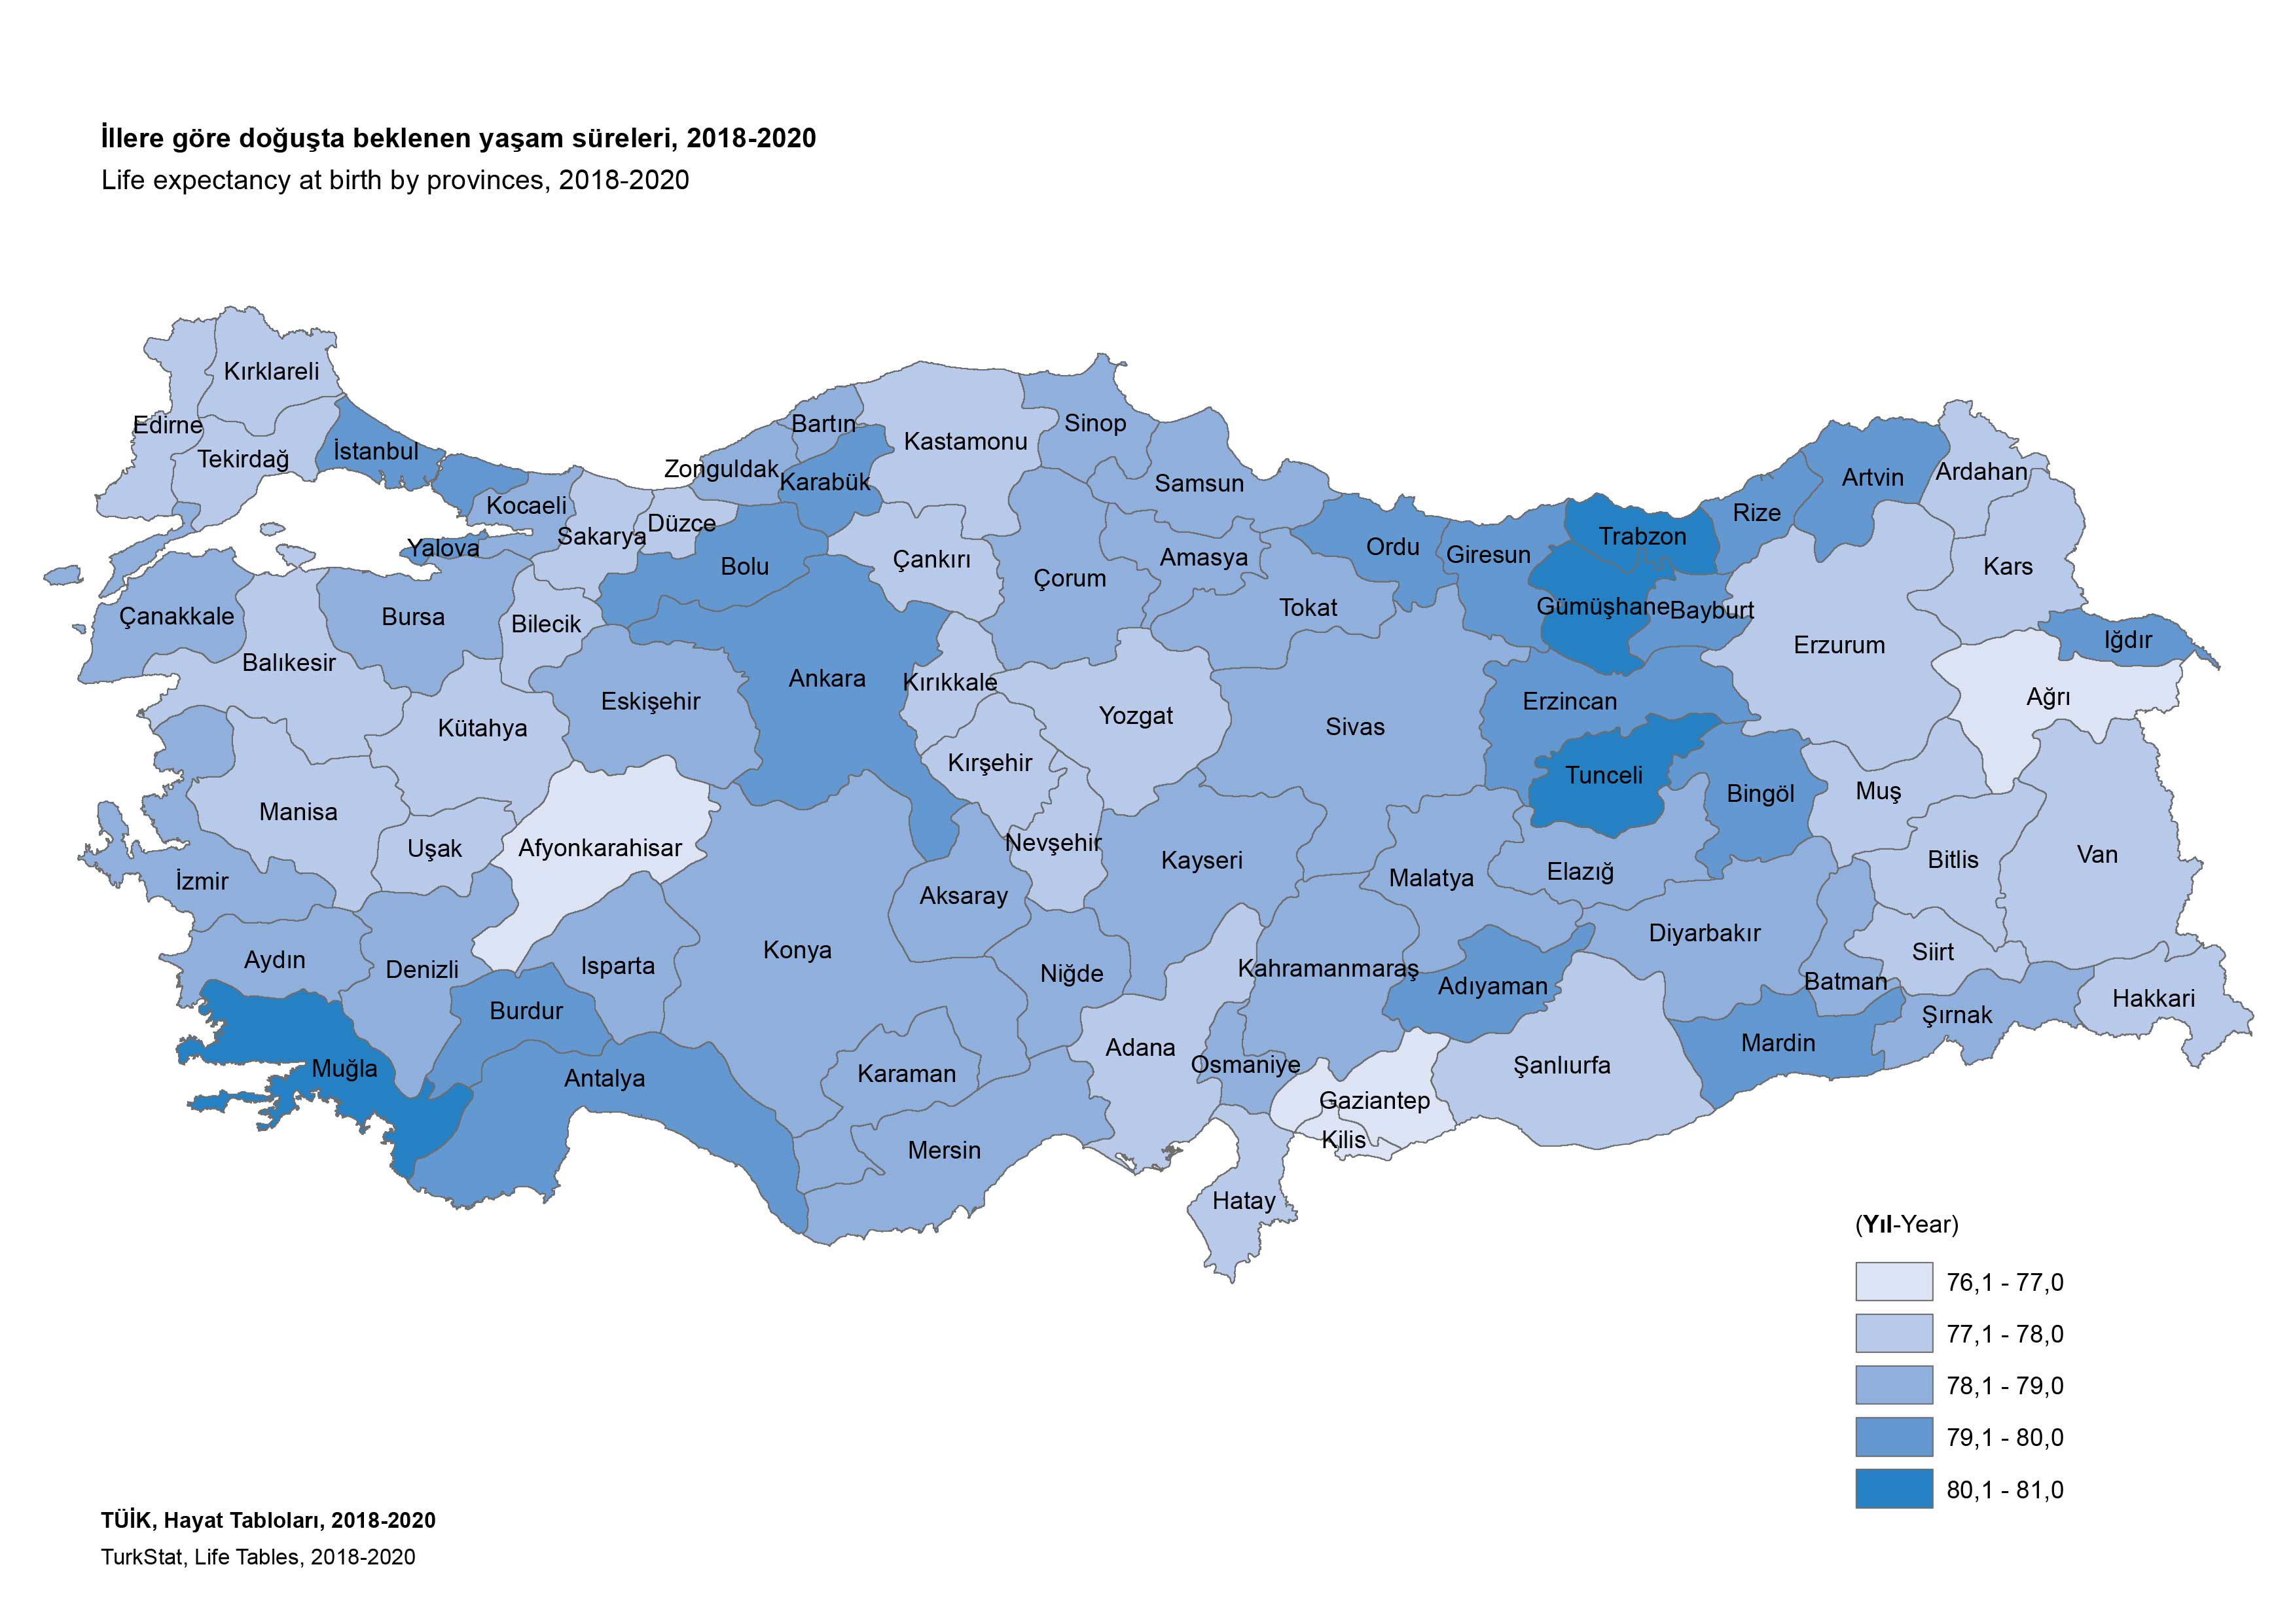 turkiye-ortalama-yasam-beklentisi-haritasi